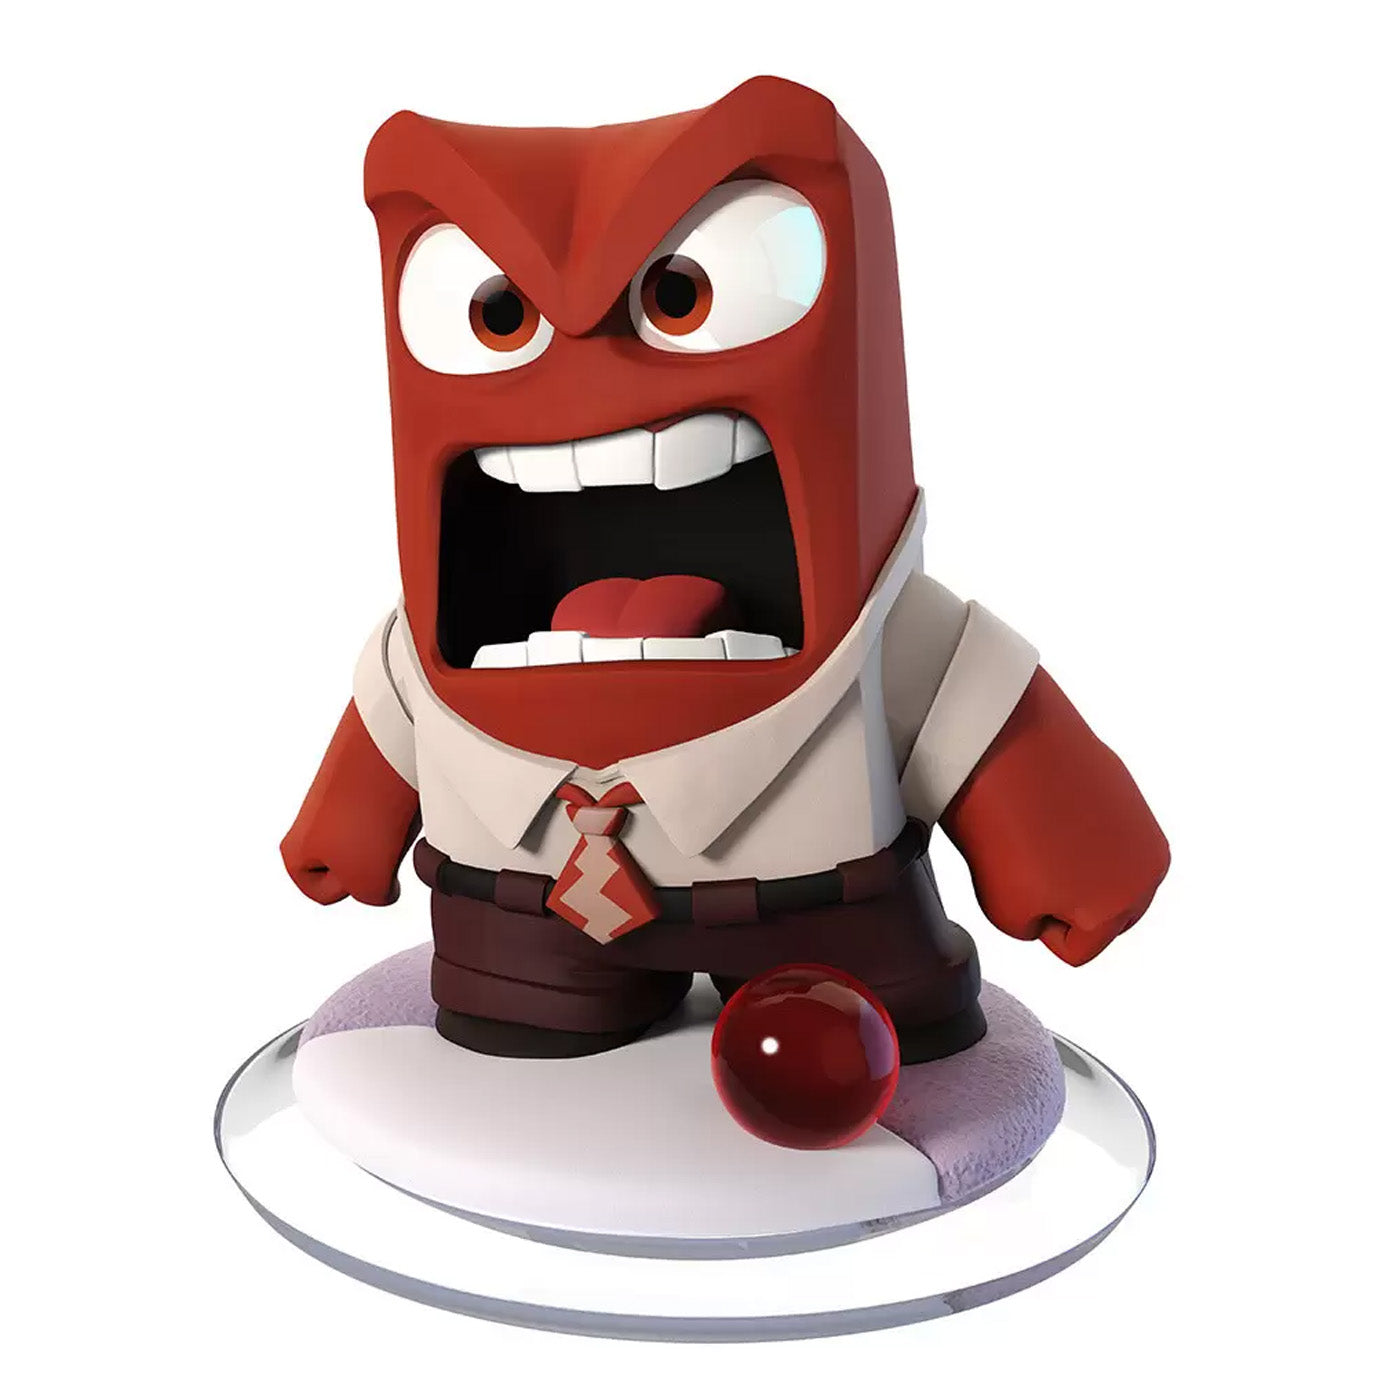 Disney Infinity 3.0 Character: Anger